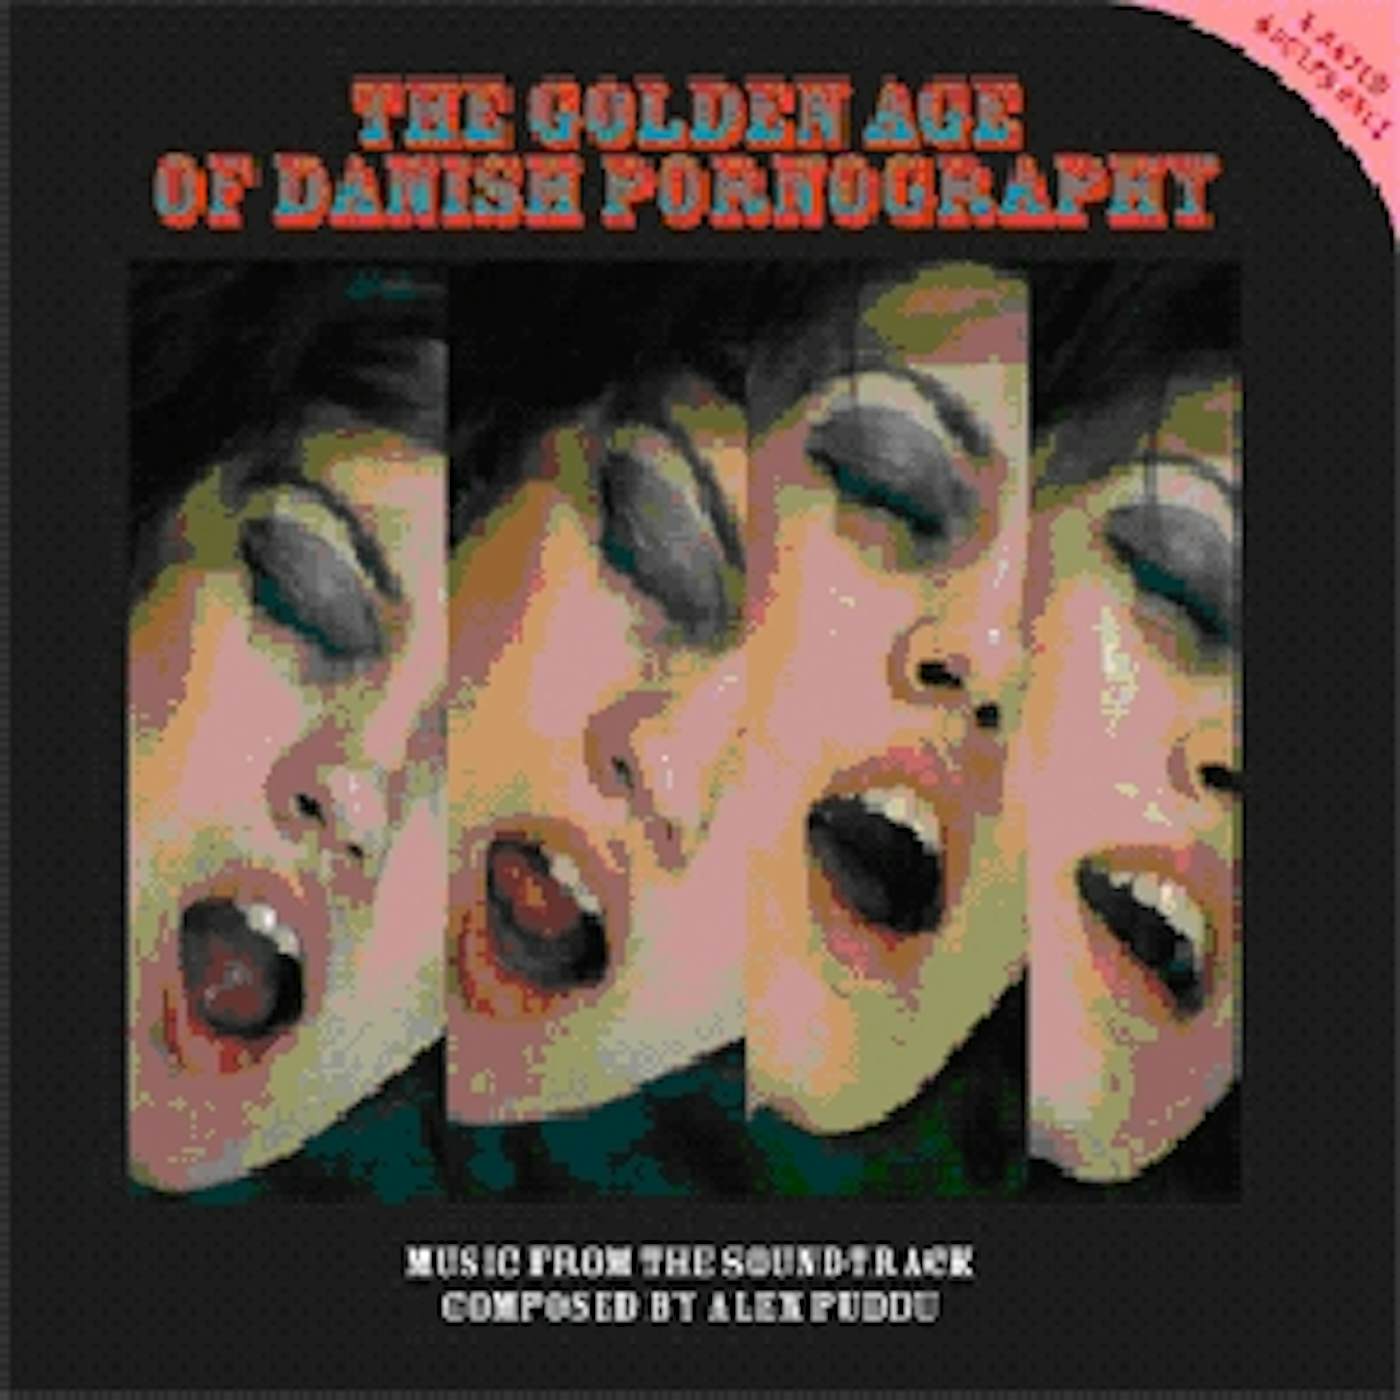 Alex Puddu GOLDEN AGE OF DANISH PORNOGRAP CD